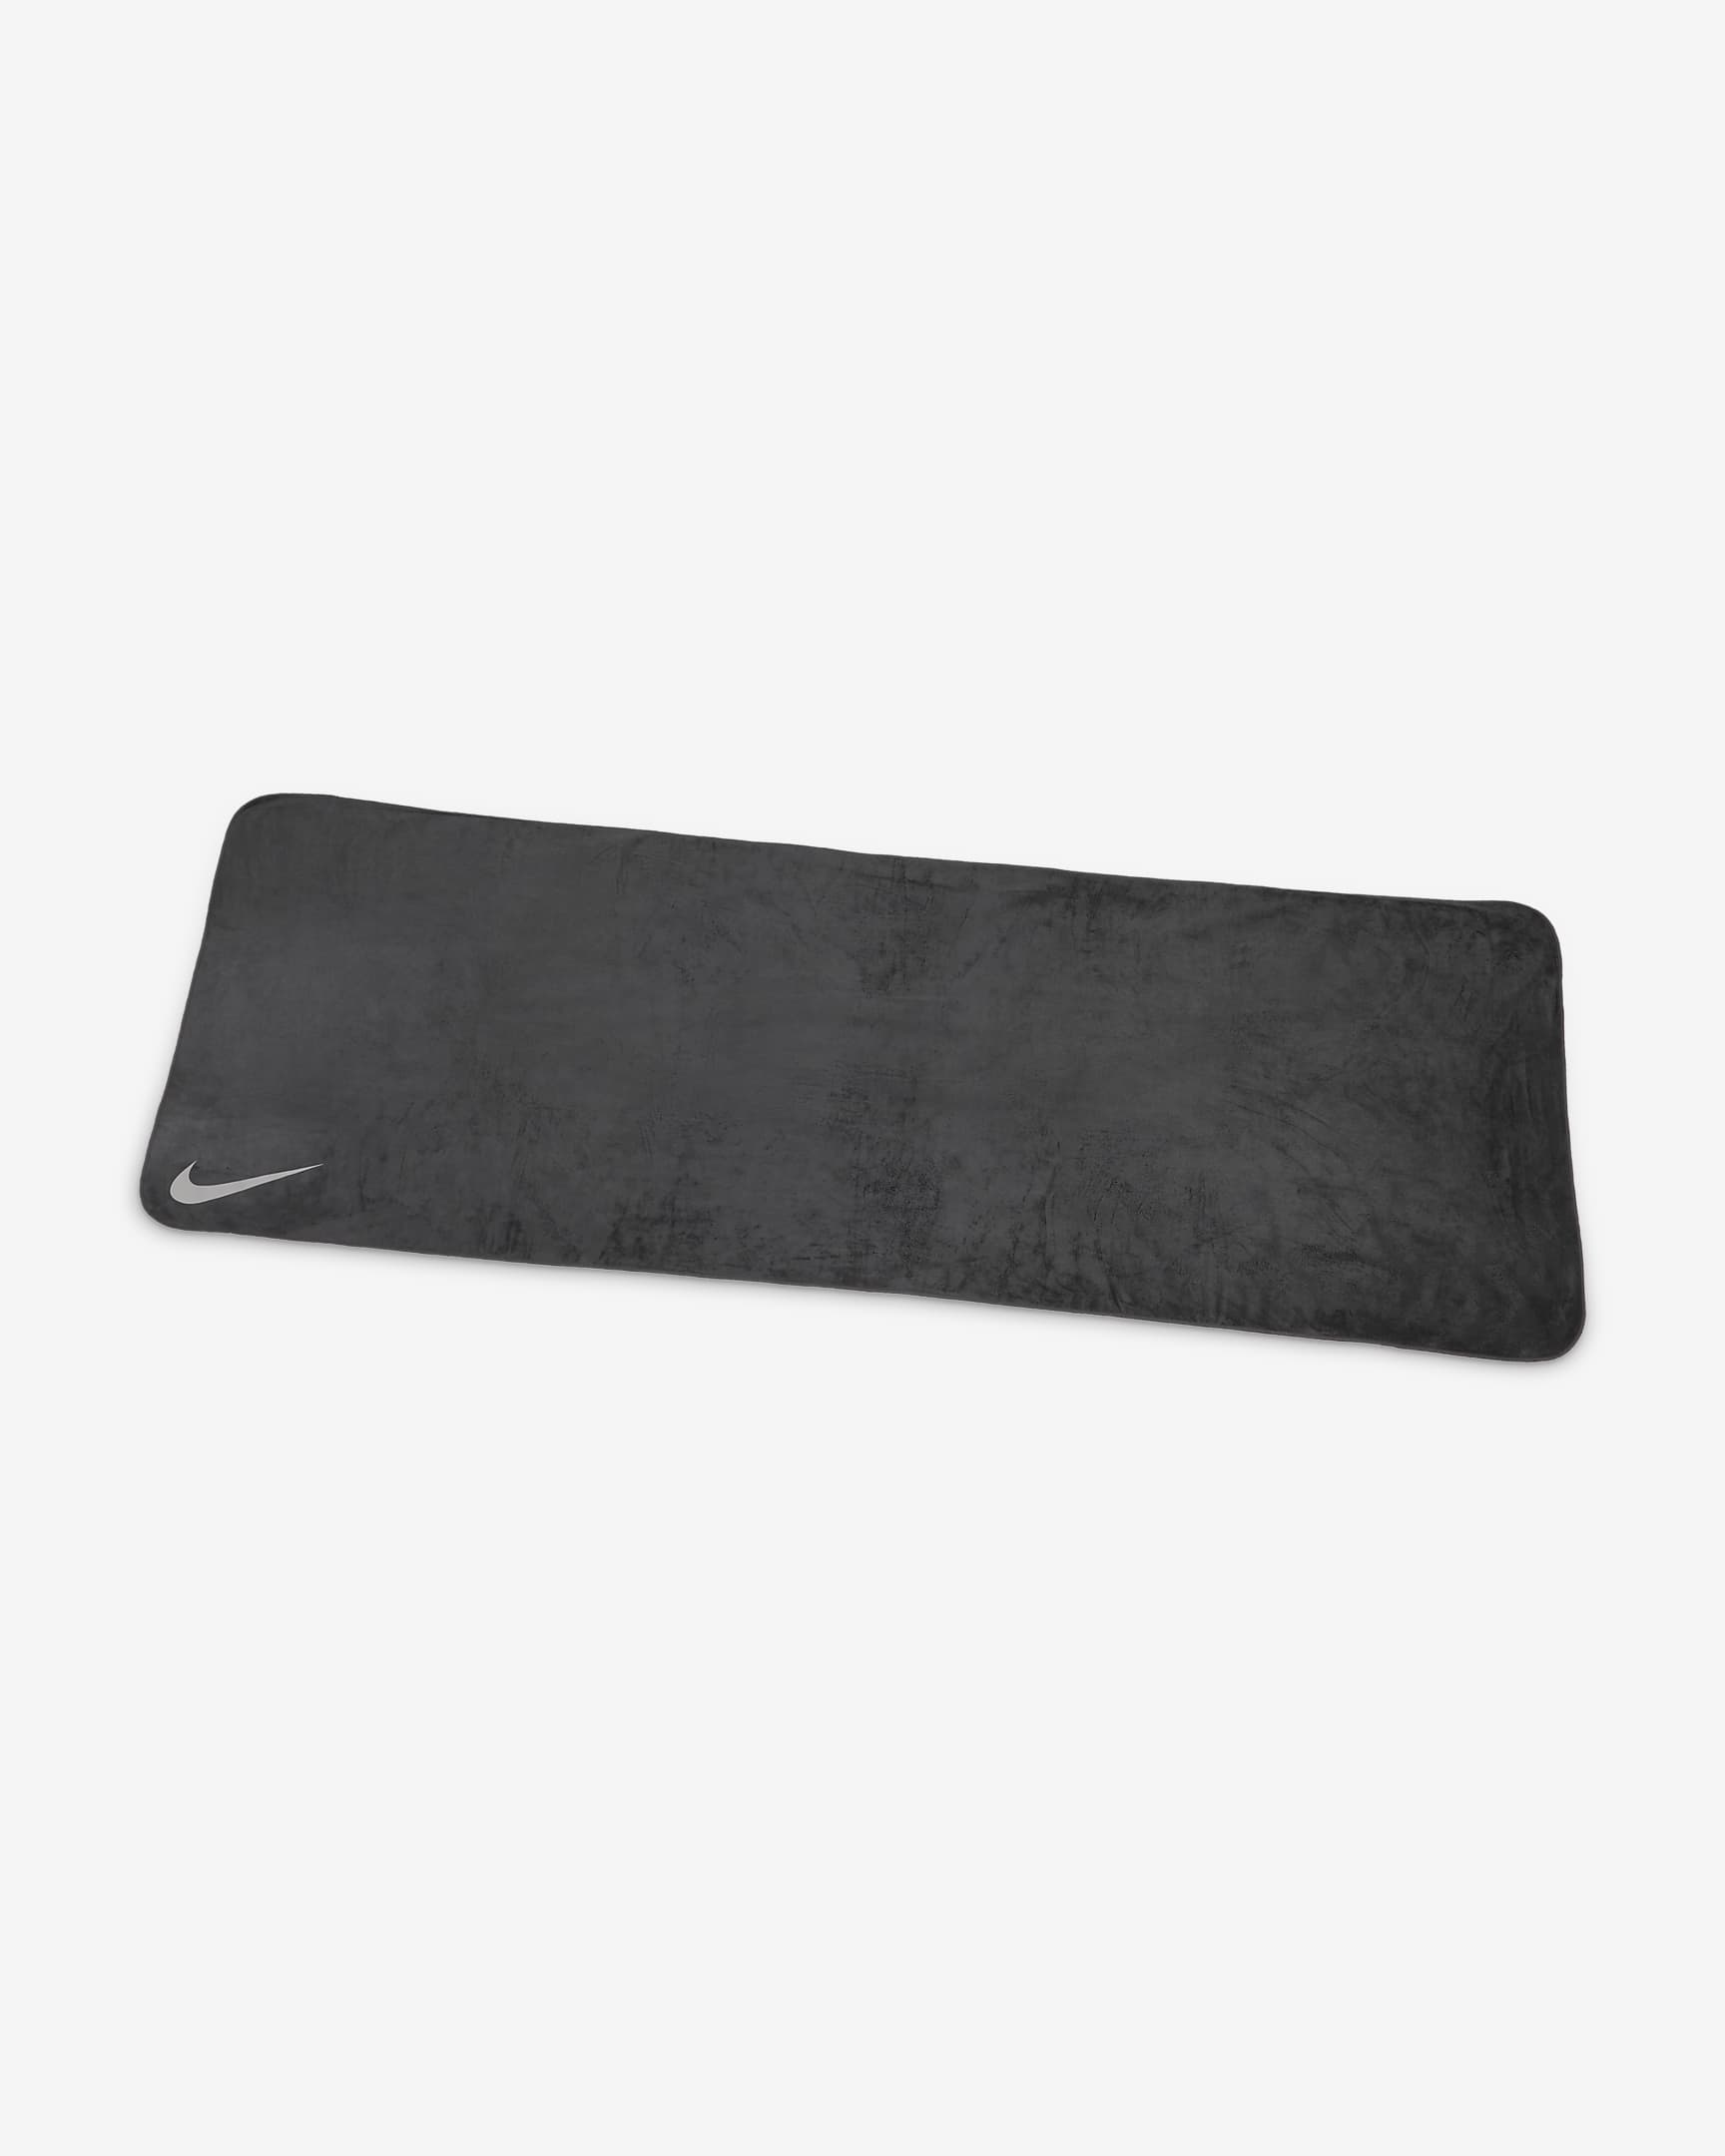 Nike Yoga Towel - Anthracite/Medium Grey